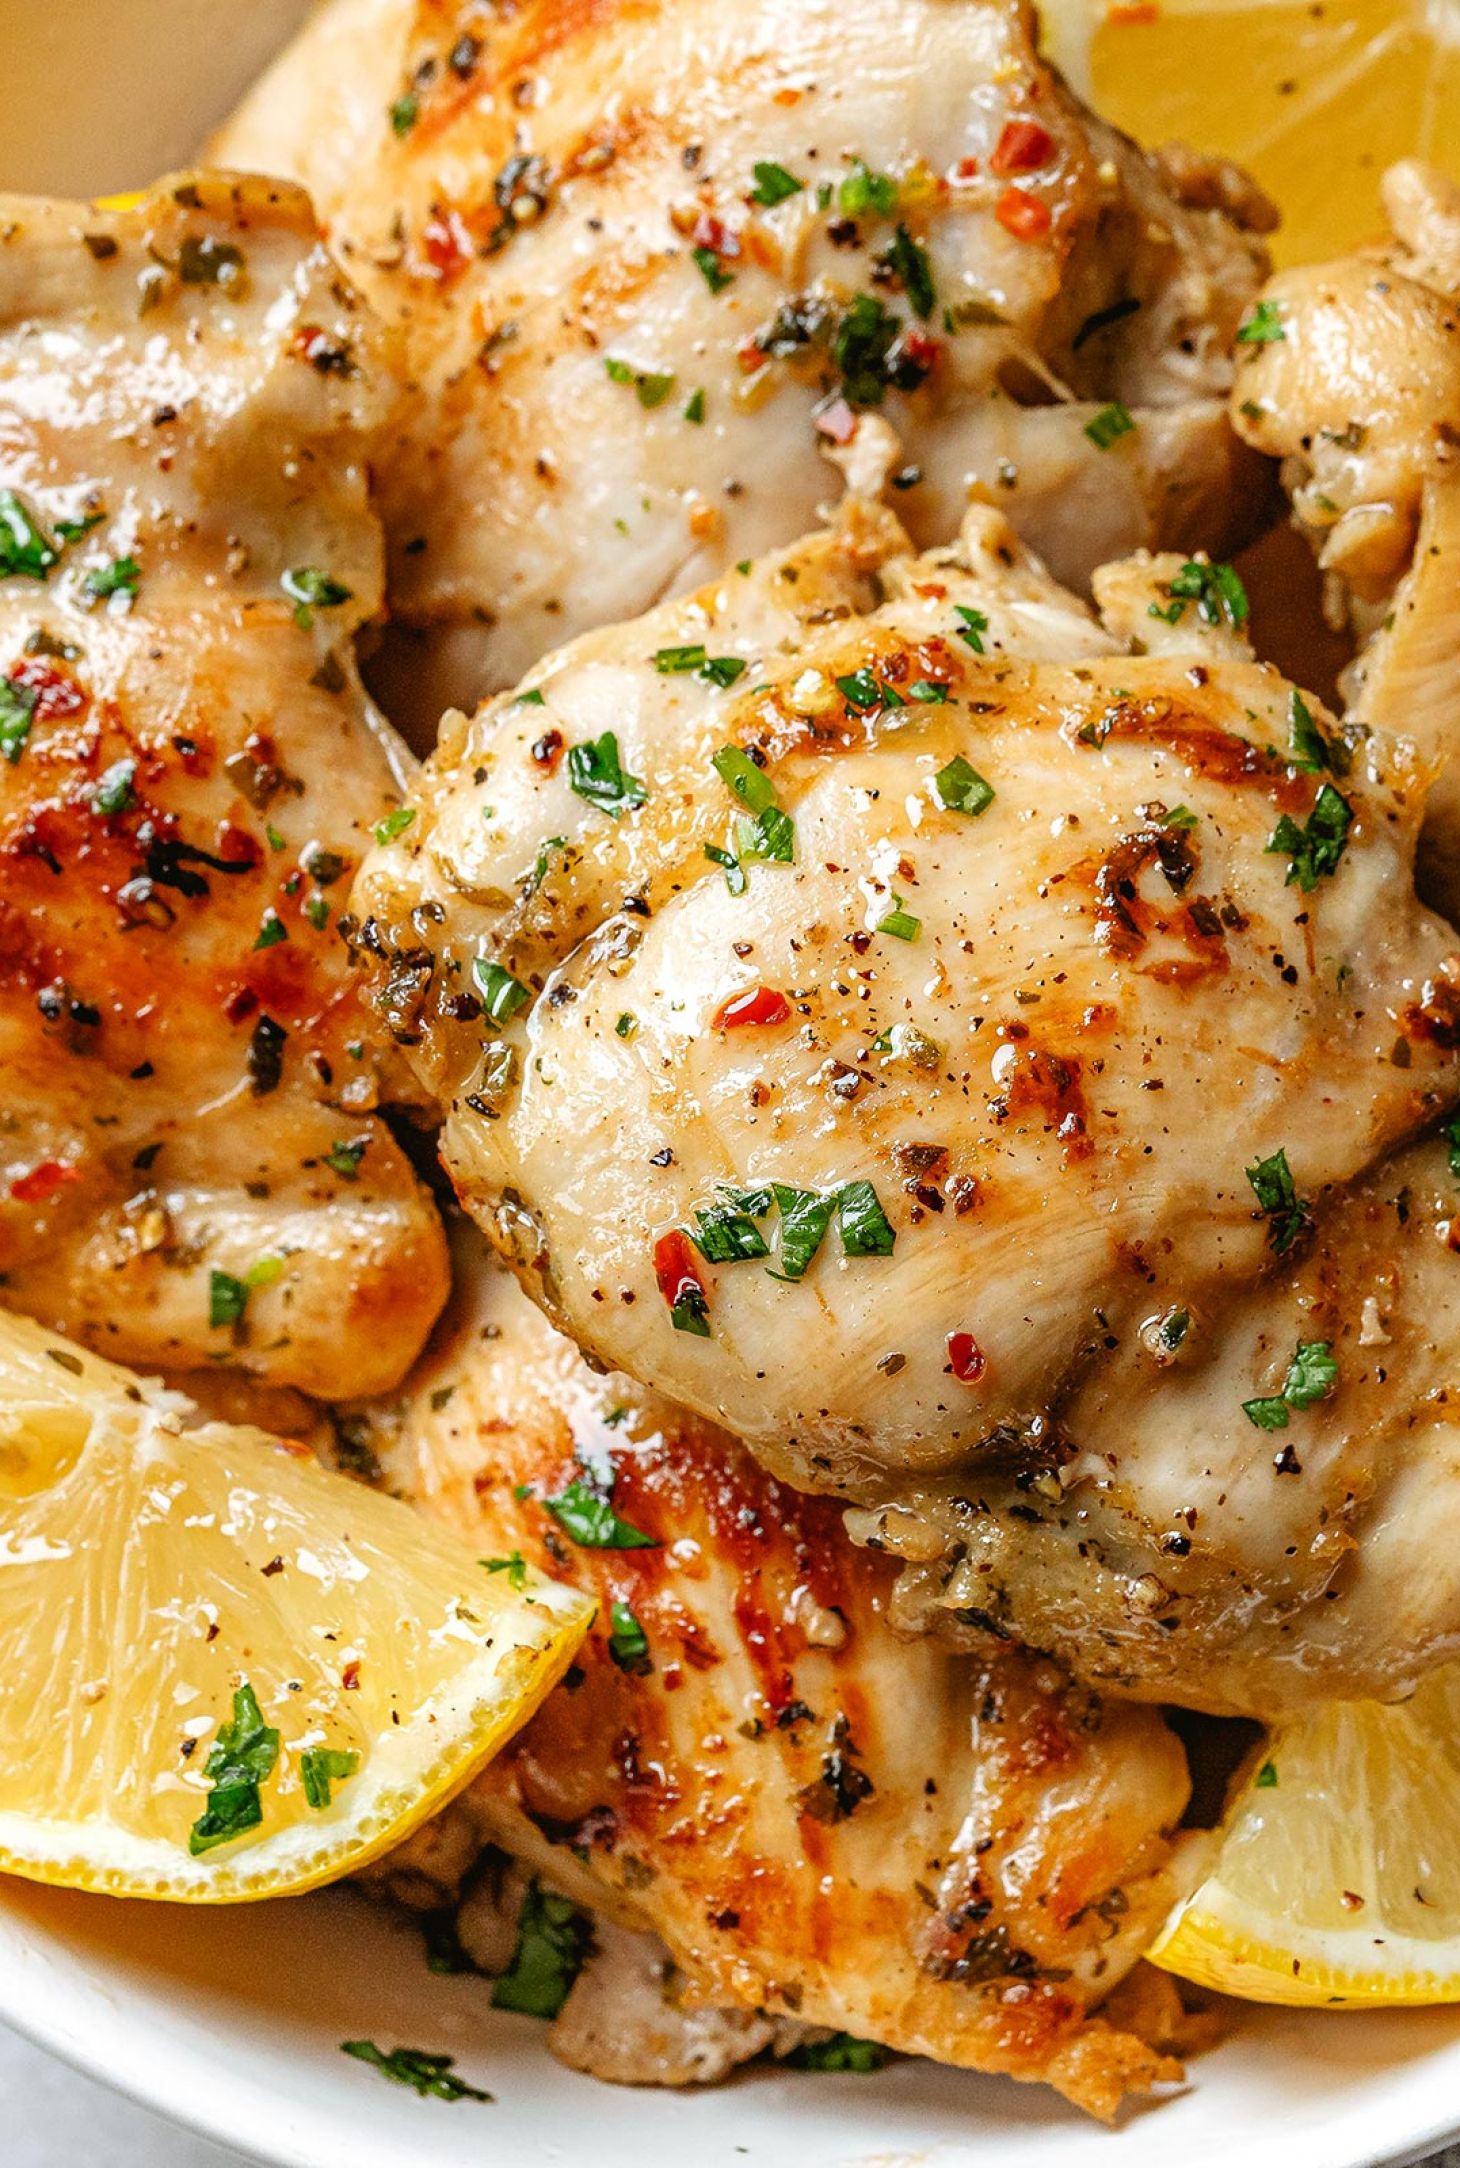 Garlic Lemon Chicken Thighs - #recipe by #eatwell101 - https://www.eatwell101.com/garlic-lemon-chicken-thighs-recipe